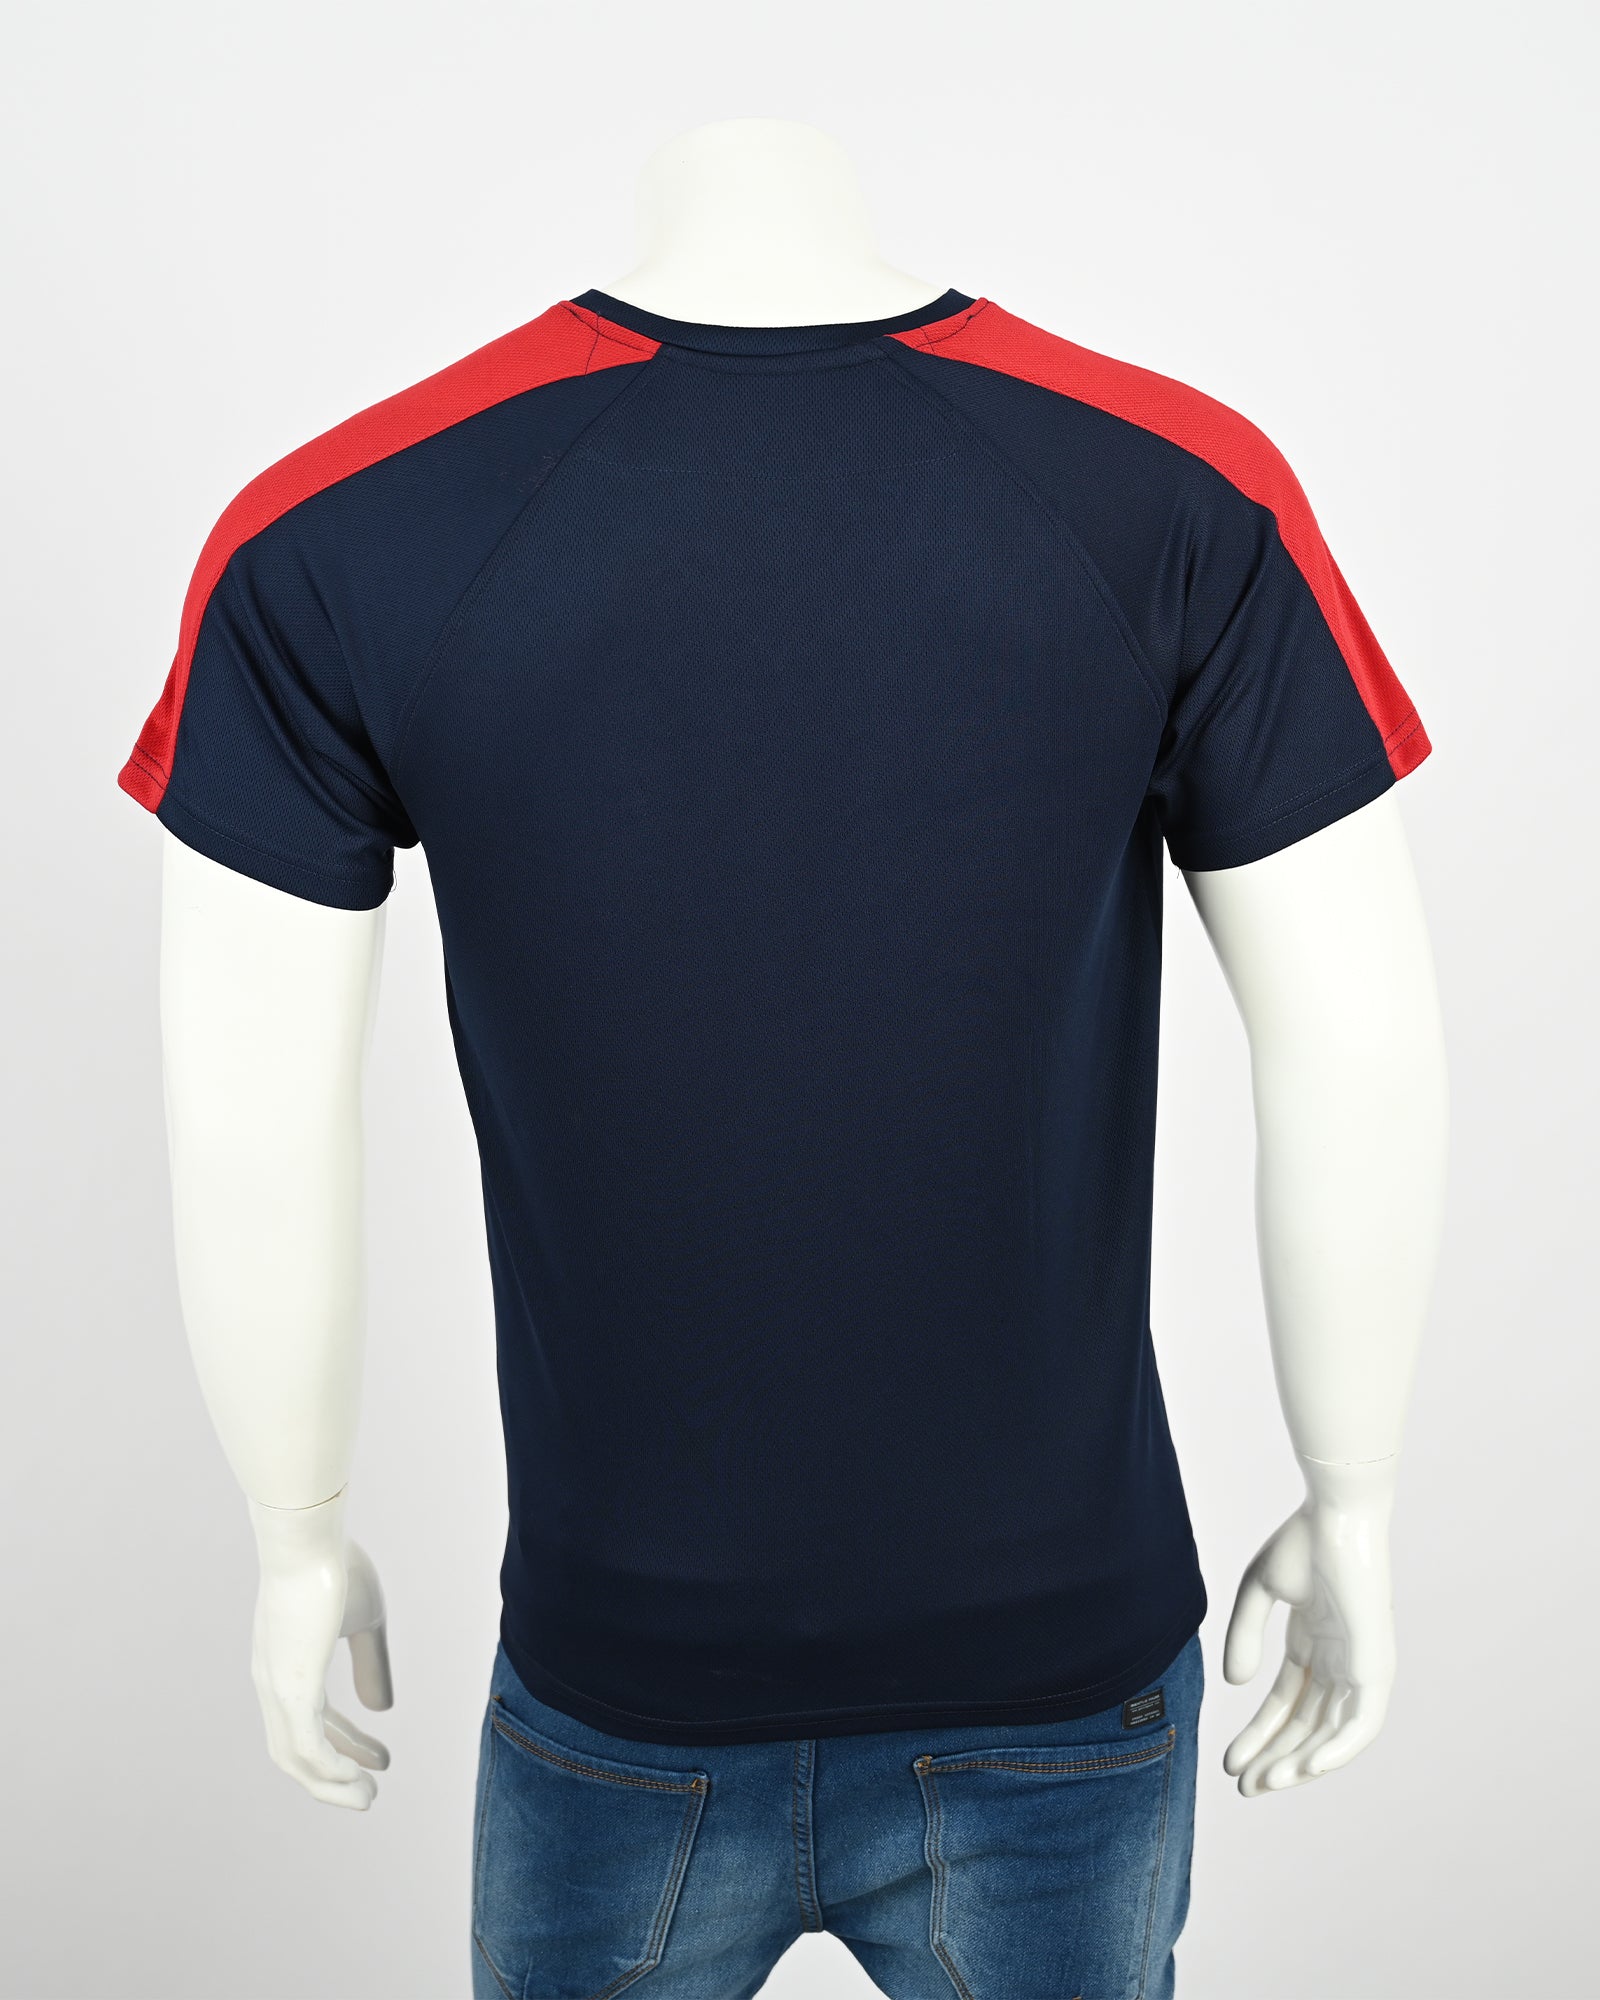 Men's Activewear DRI-FIT Football Jersey